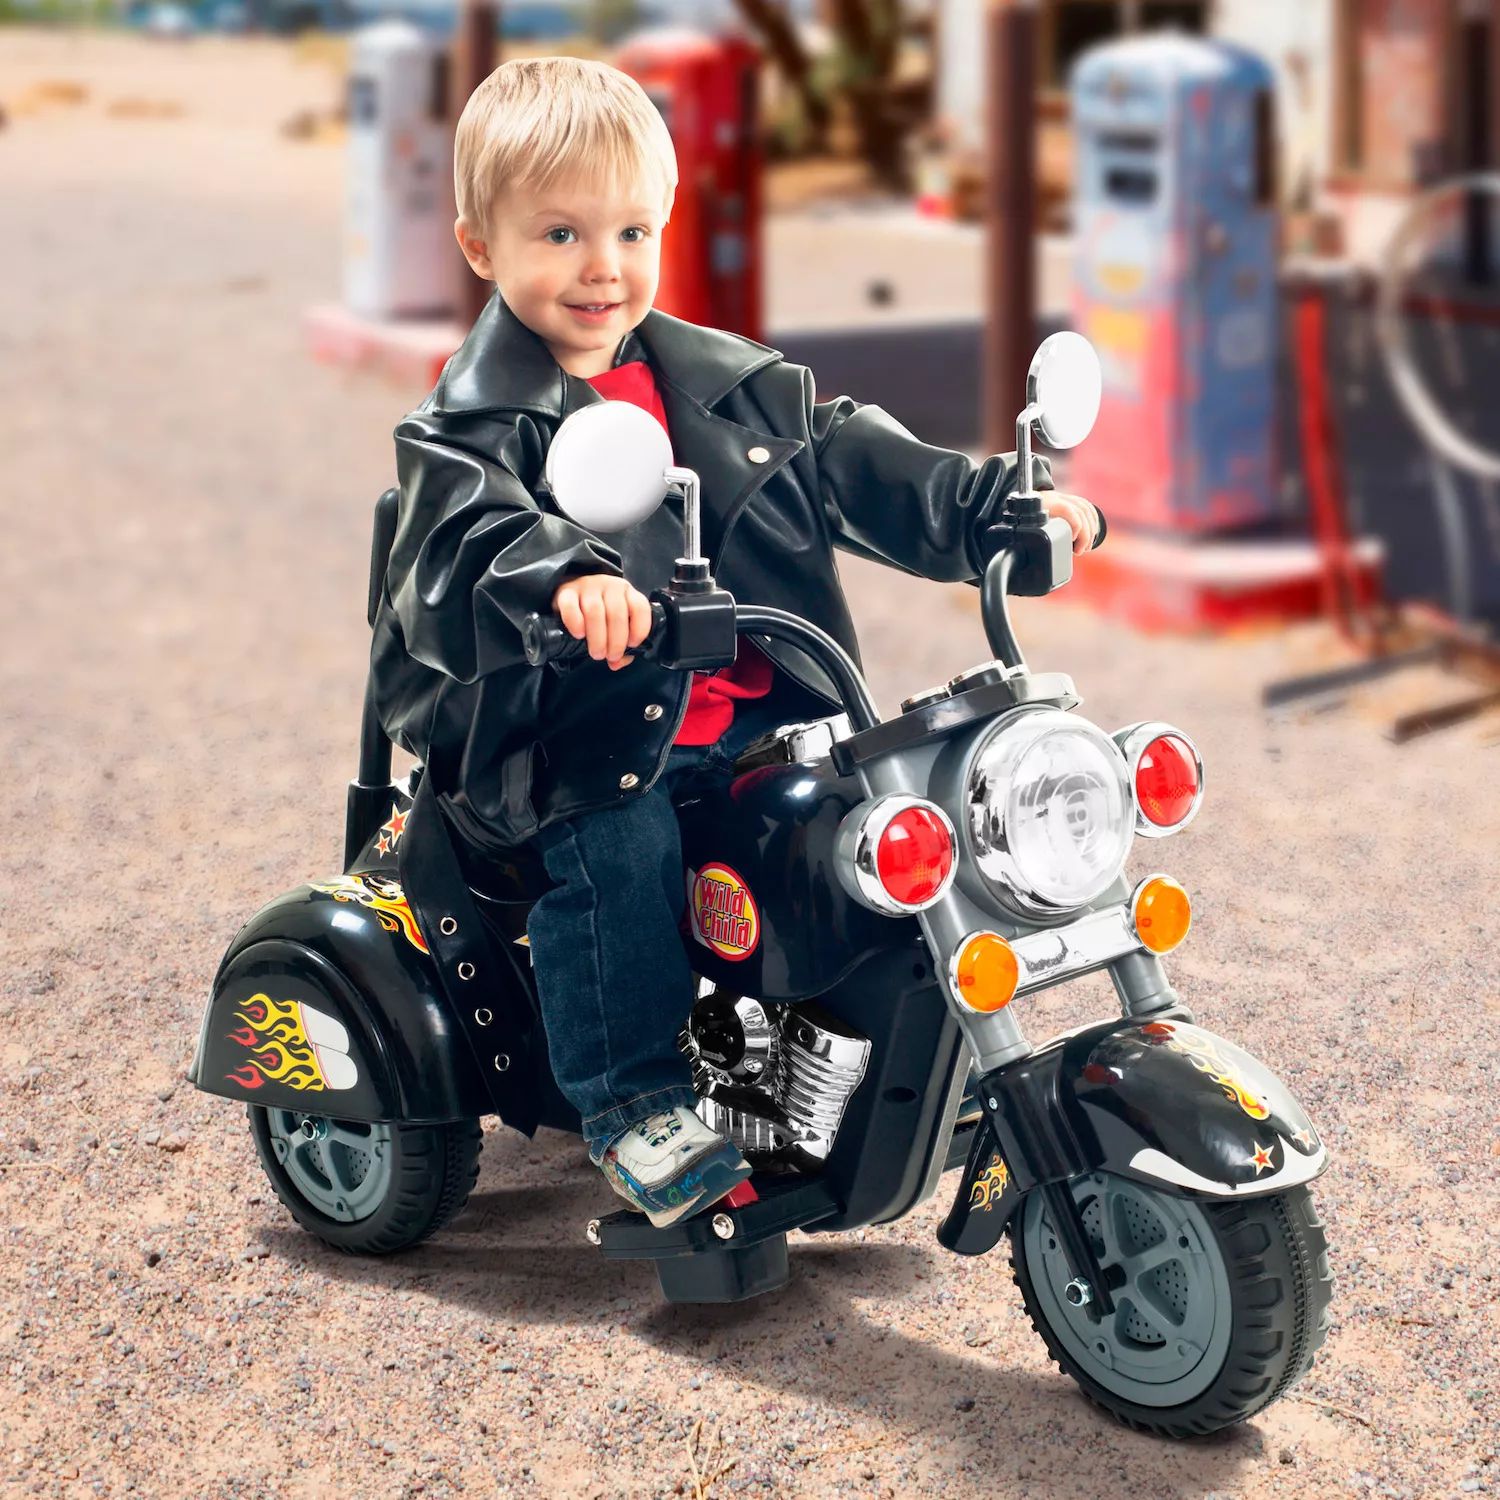 Бесплатные мотоциклы для детей. Детский электромотоцикл Харлей Дэвидсон. Детский мотоцикл Харлей Дэвидсон на аккумуляторе. D8360 мотоцикл детский. Детский электромотоцикл Wild child.